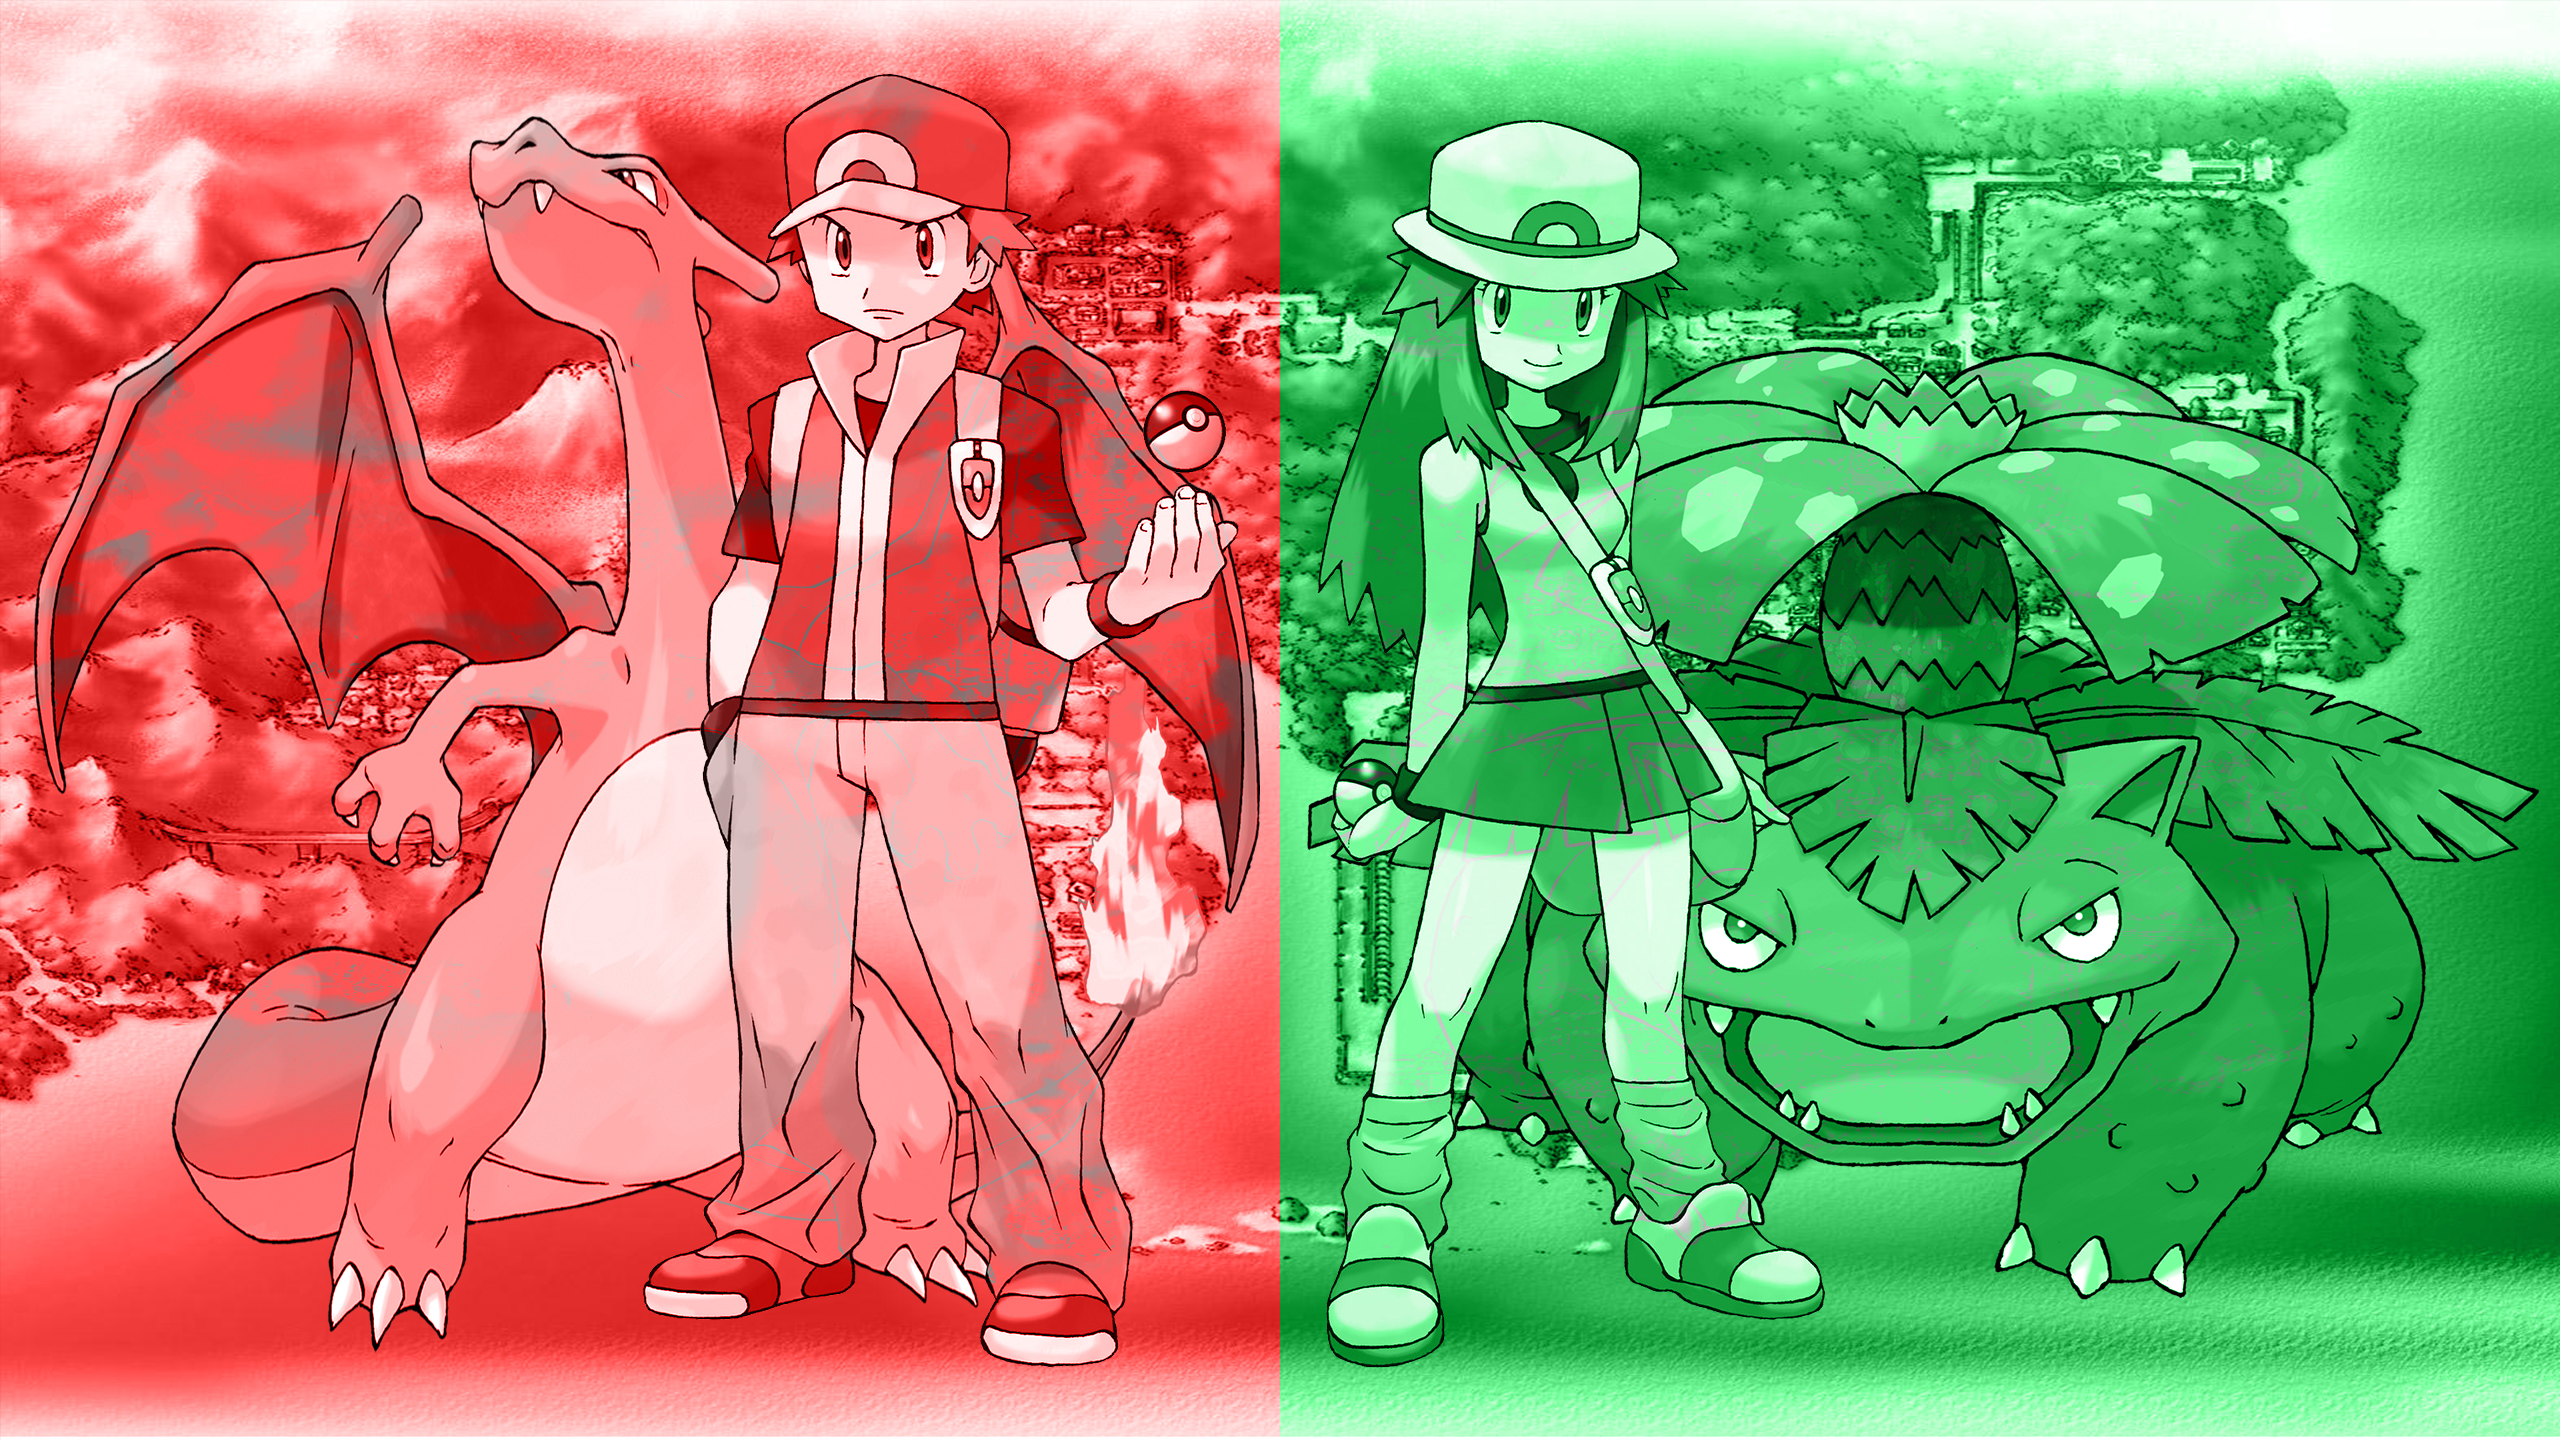 Pokémon FireRed and LeafGreen